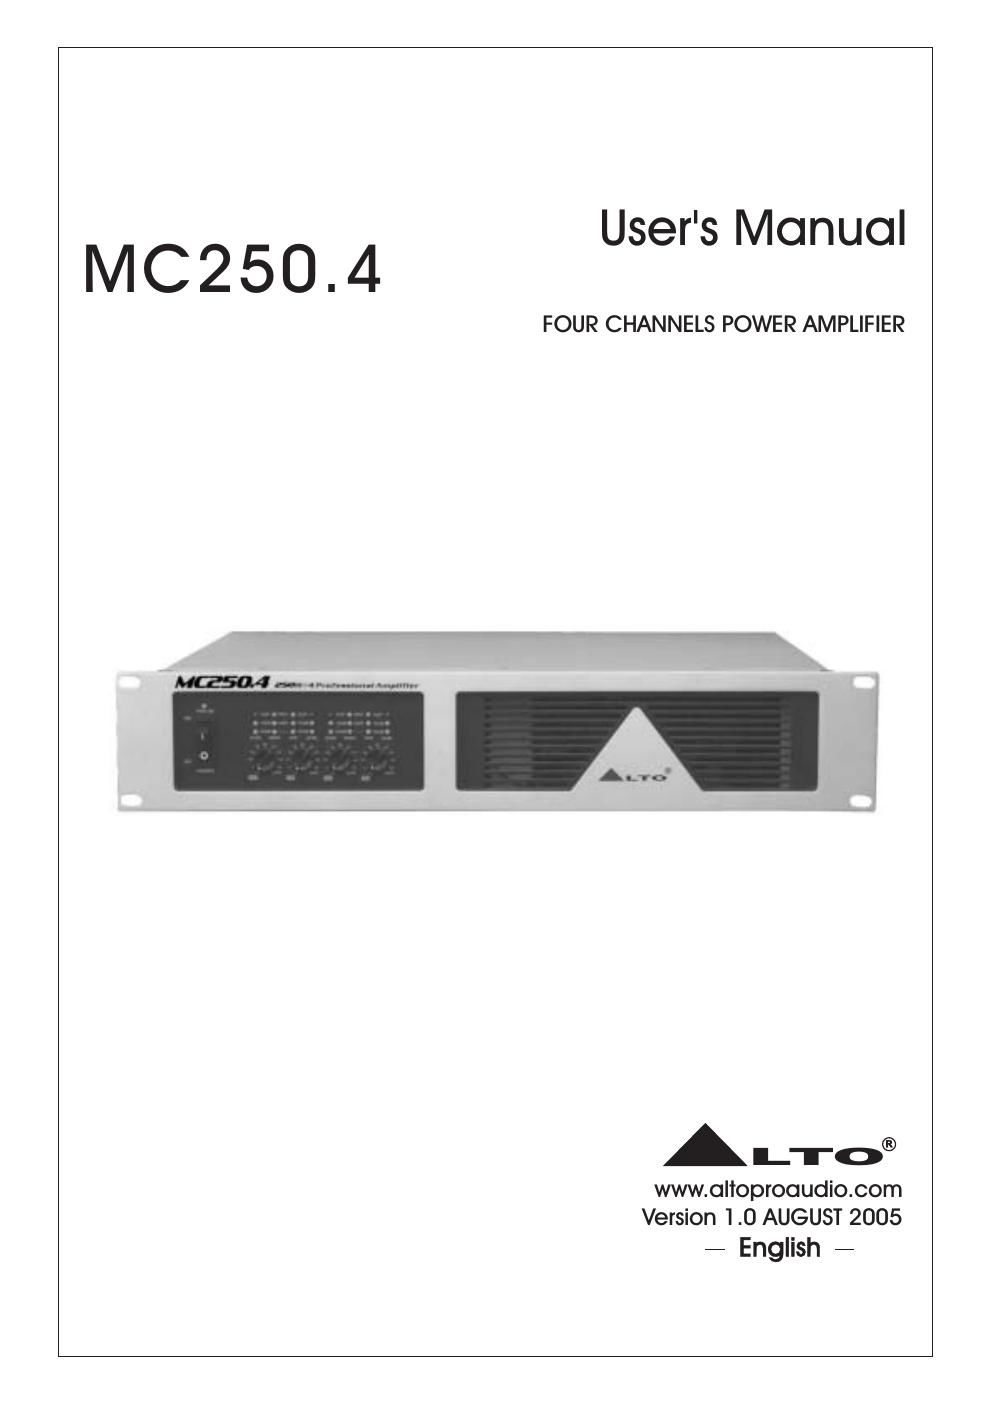 alto mc 250 4 users manual